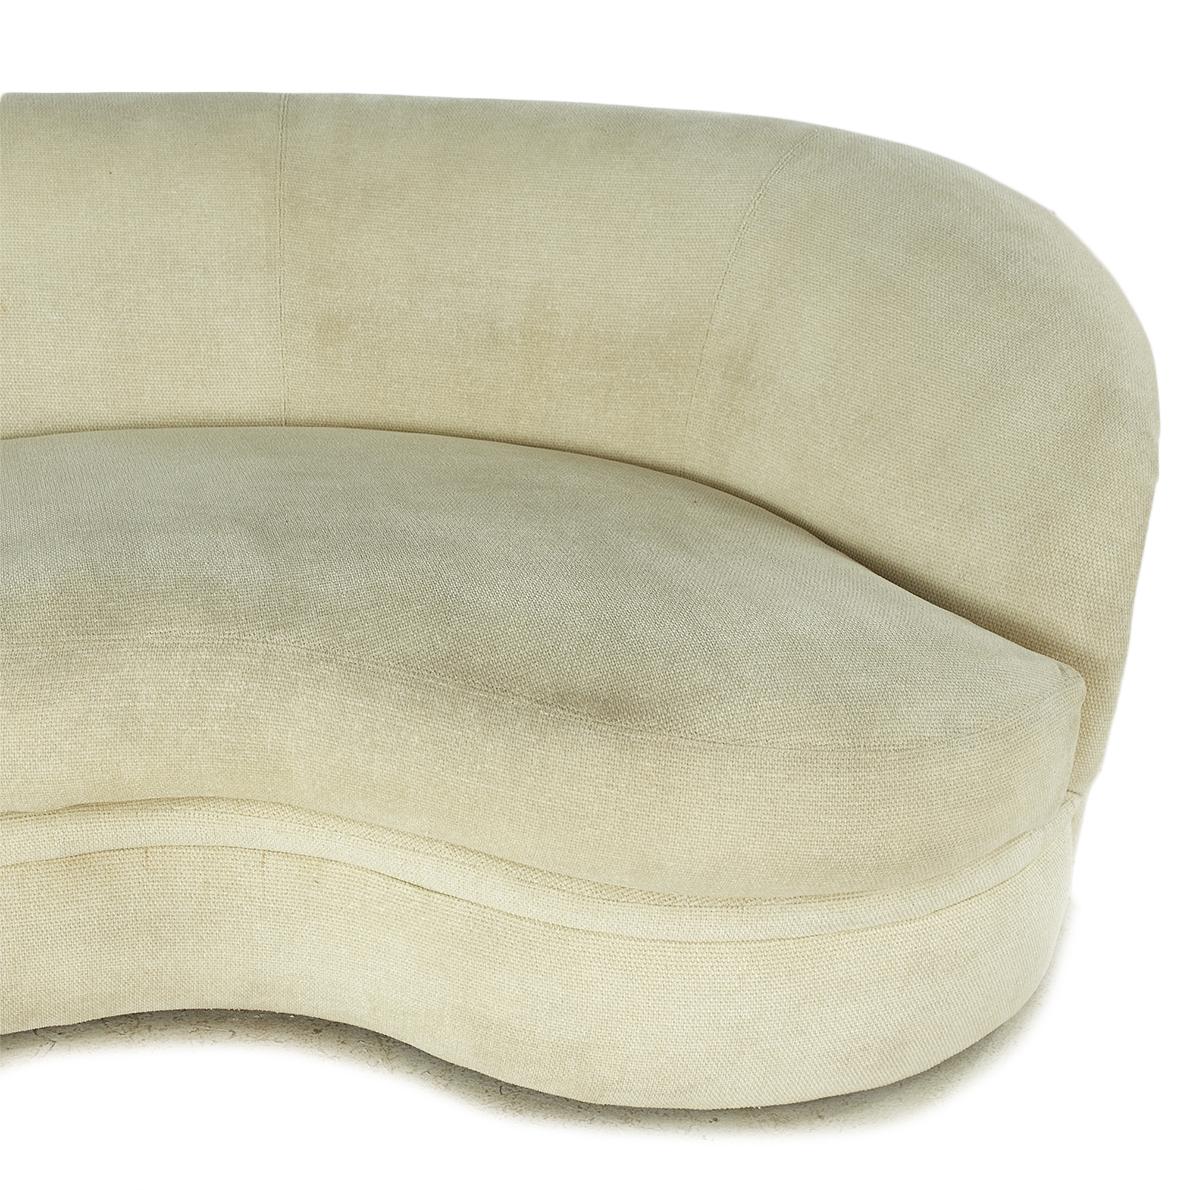 Kagan Style Directional Furniture Midcentury Biomorphic Kidney Sofa For Sale 1